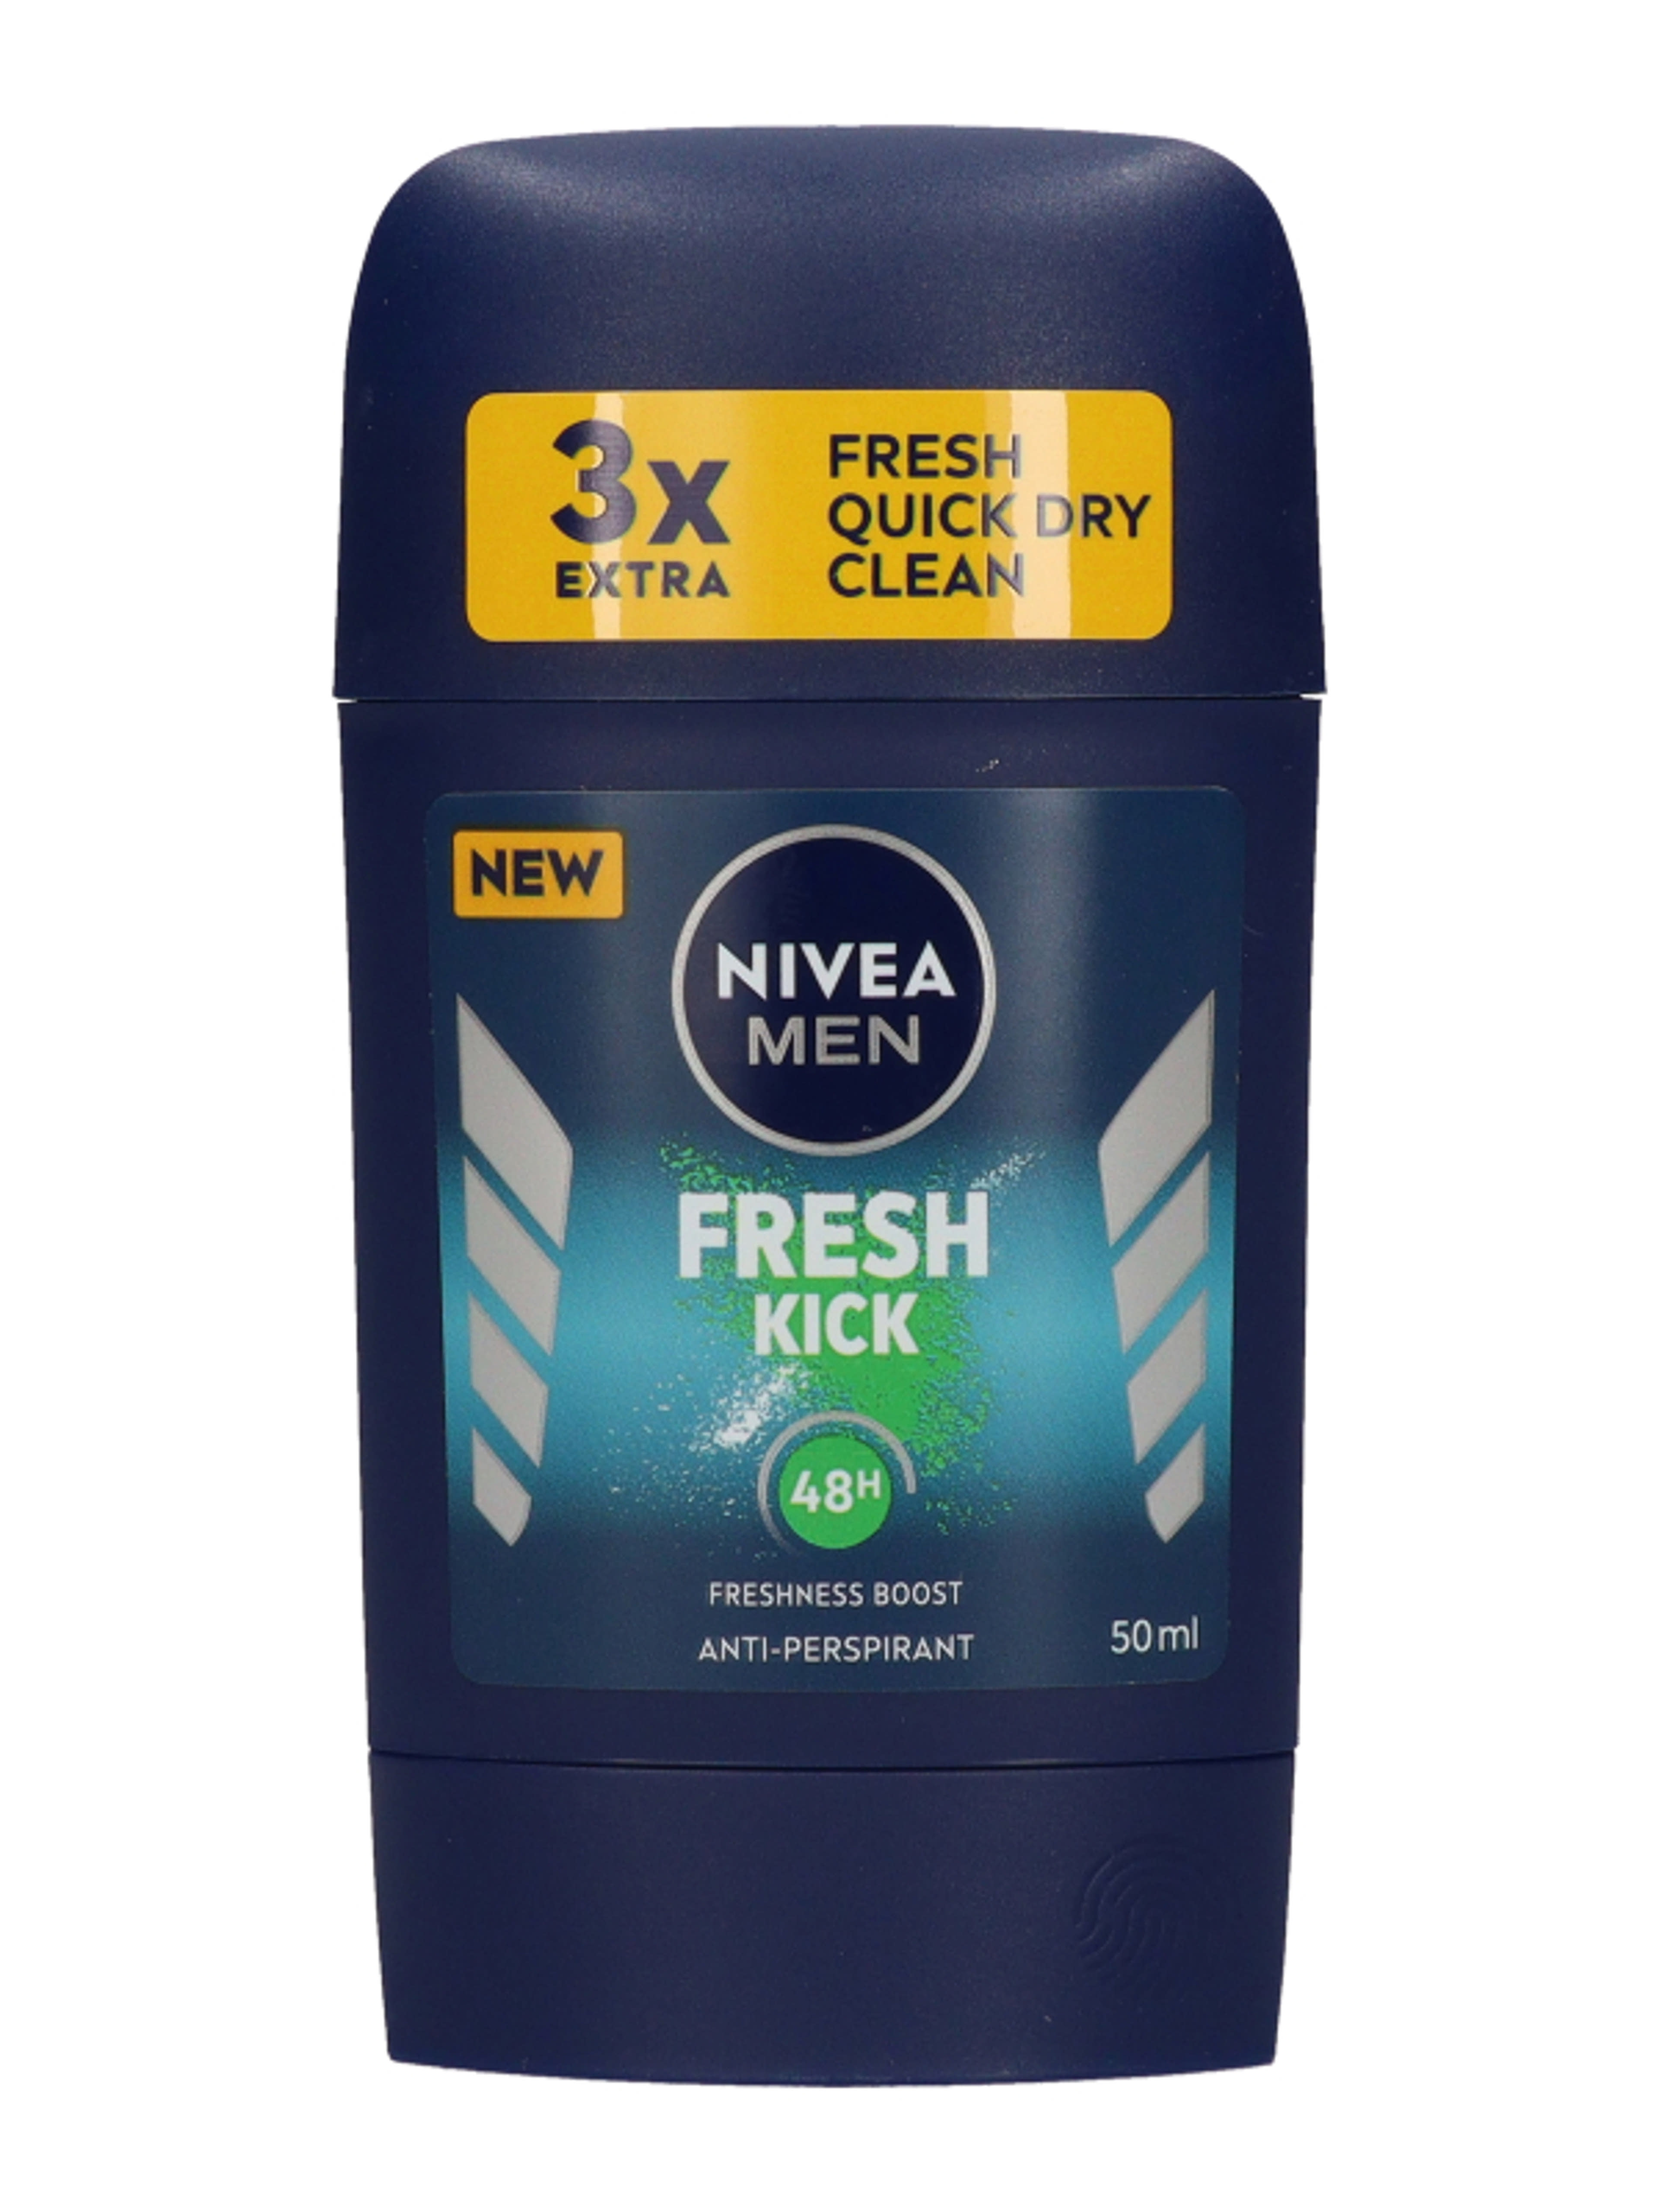 Nivea Men Fresh Kick deo stift - 50 ml-3